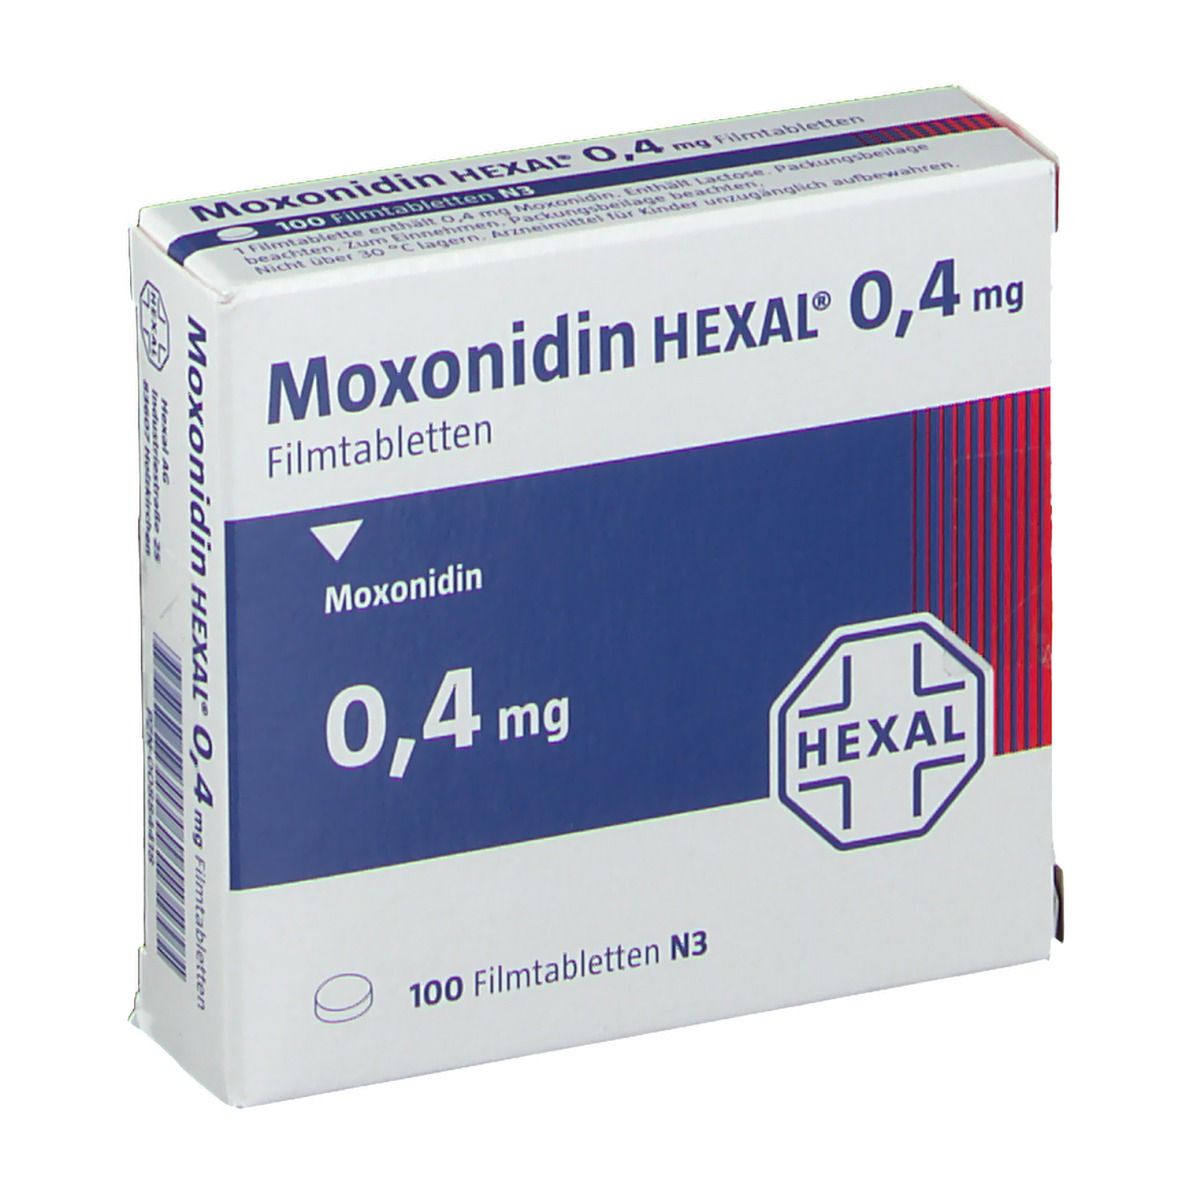 Moxonidin HEXAL® 0,4 mg